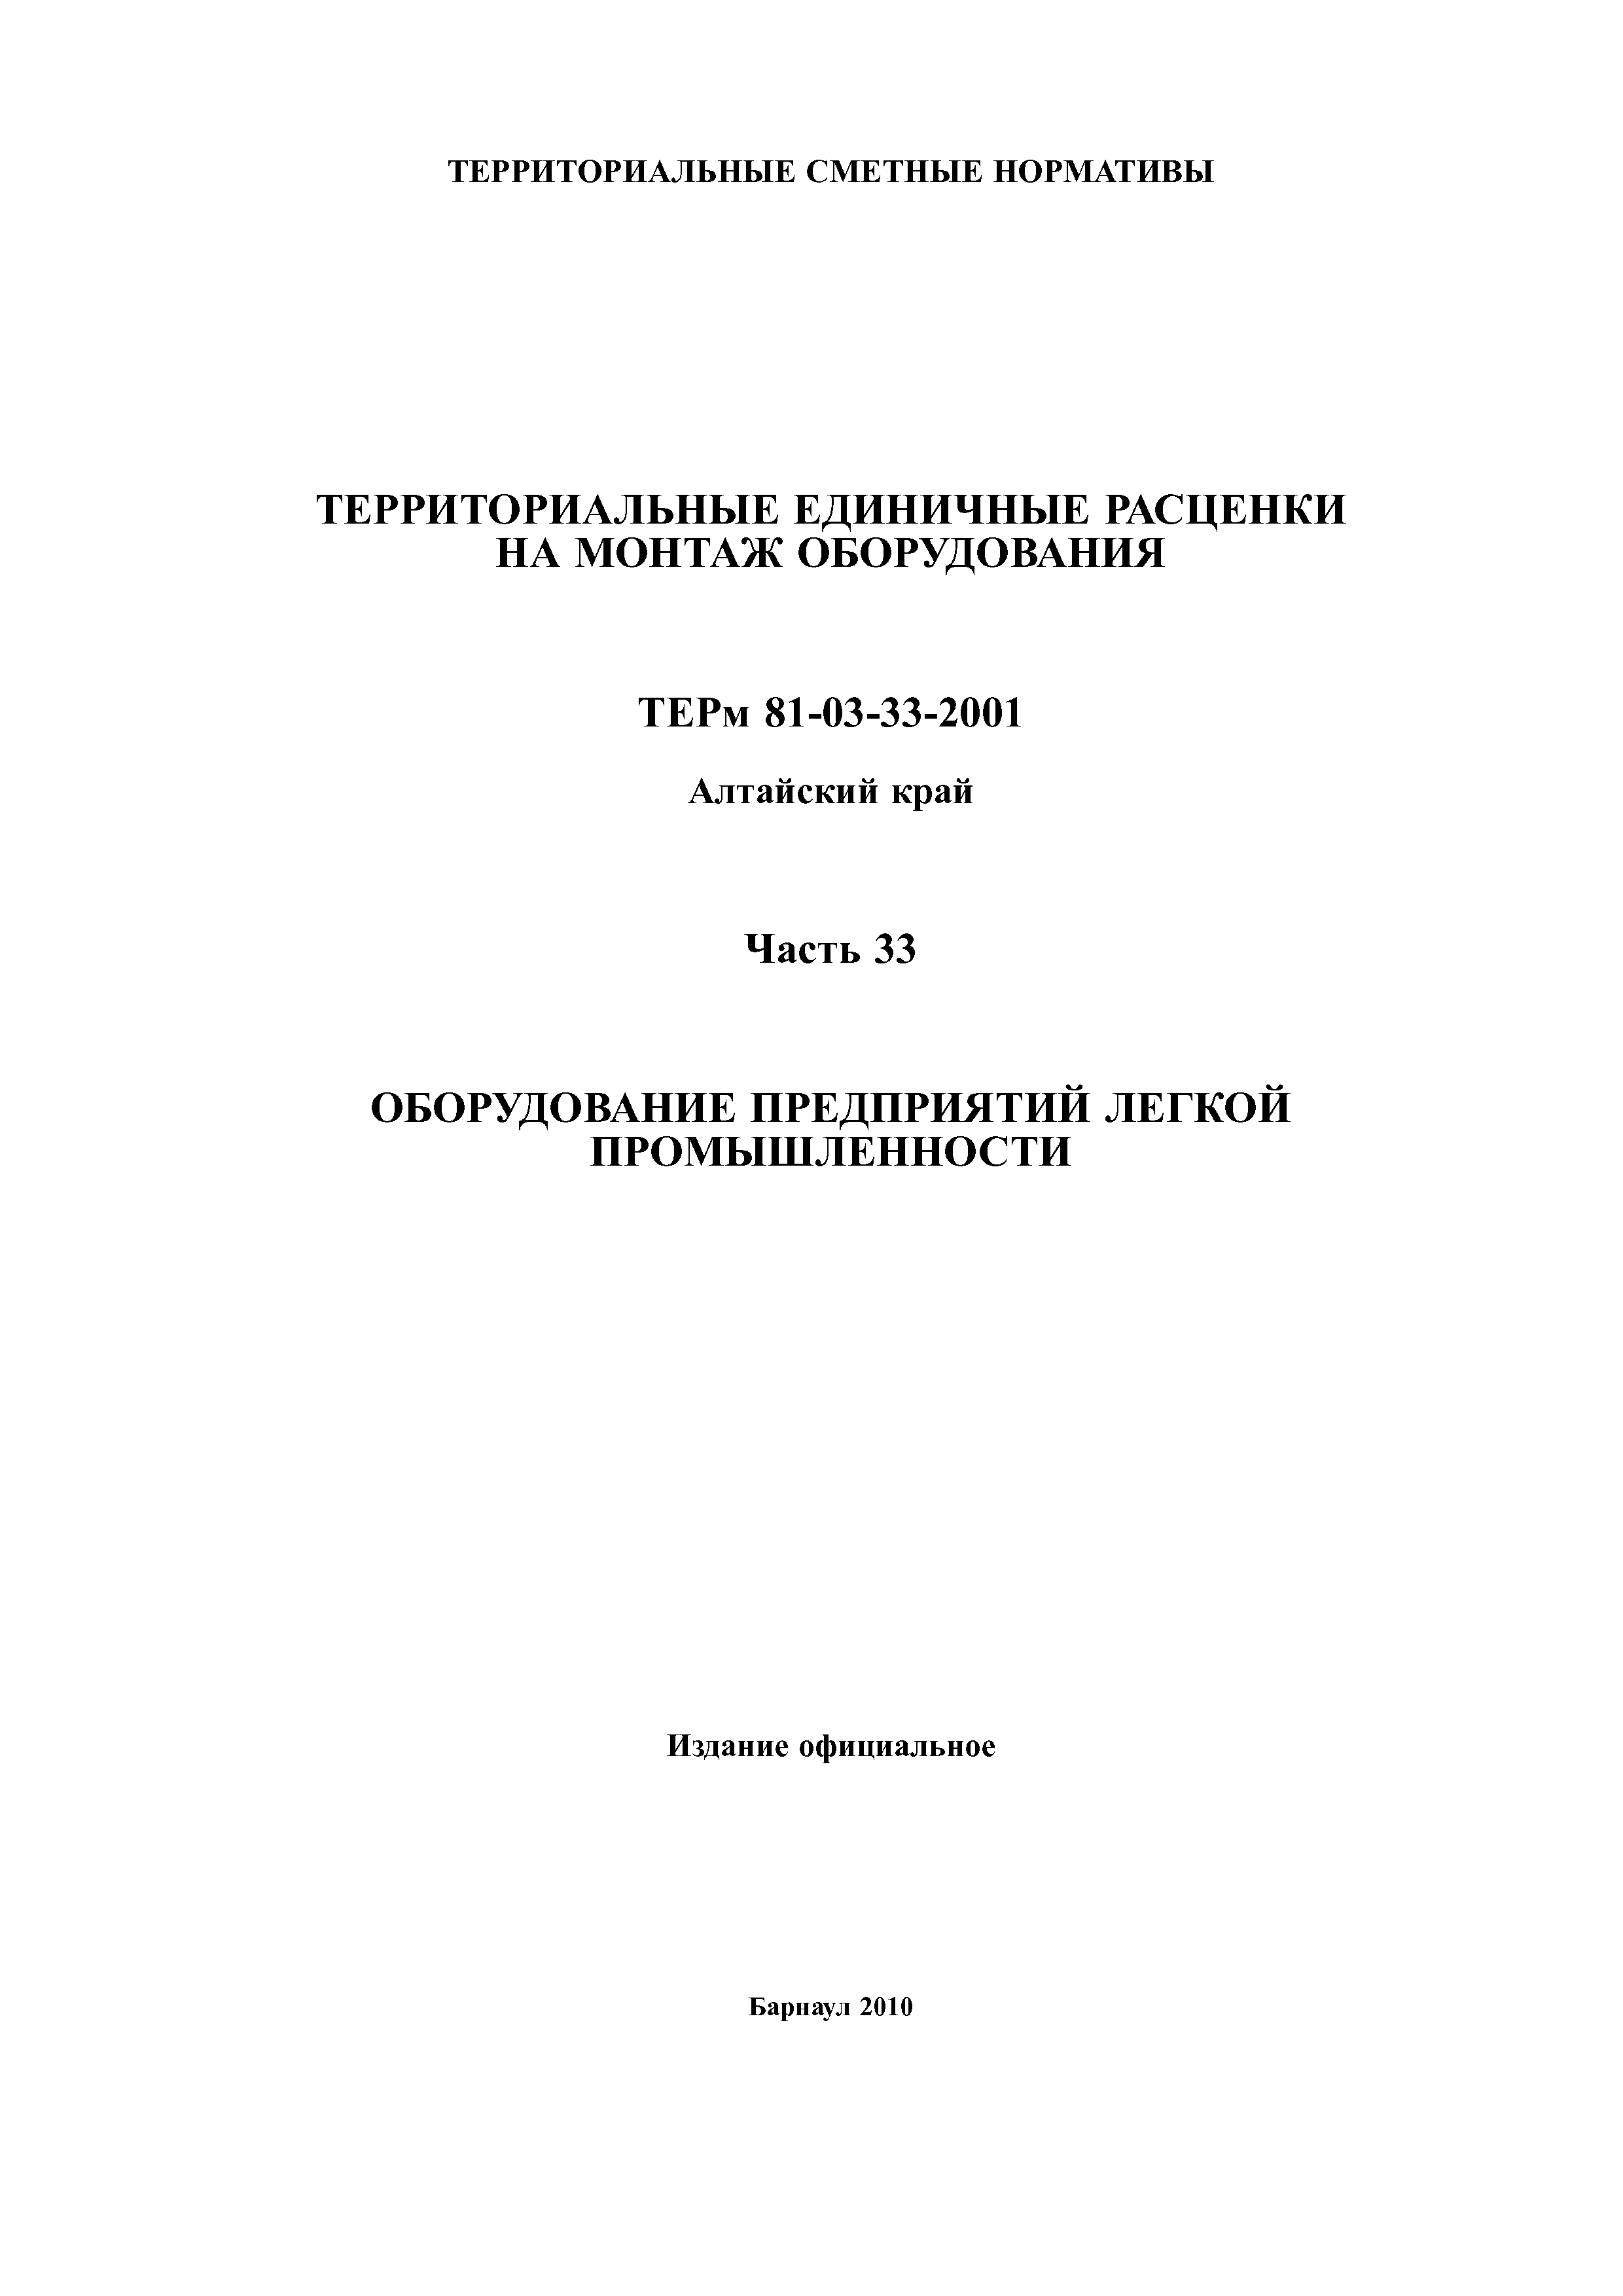 ТЕРм Алтайский край 81-03-33-2001